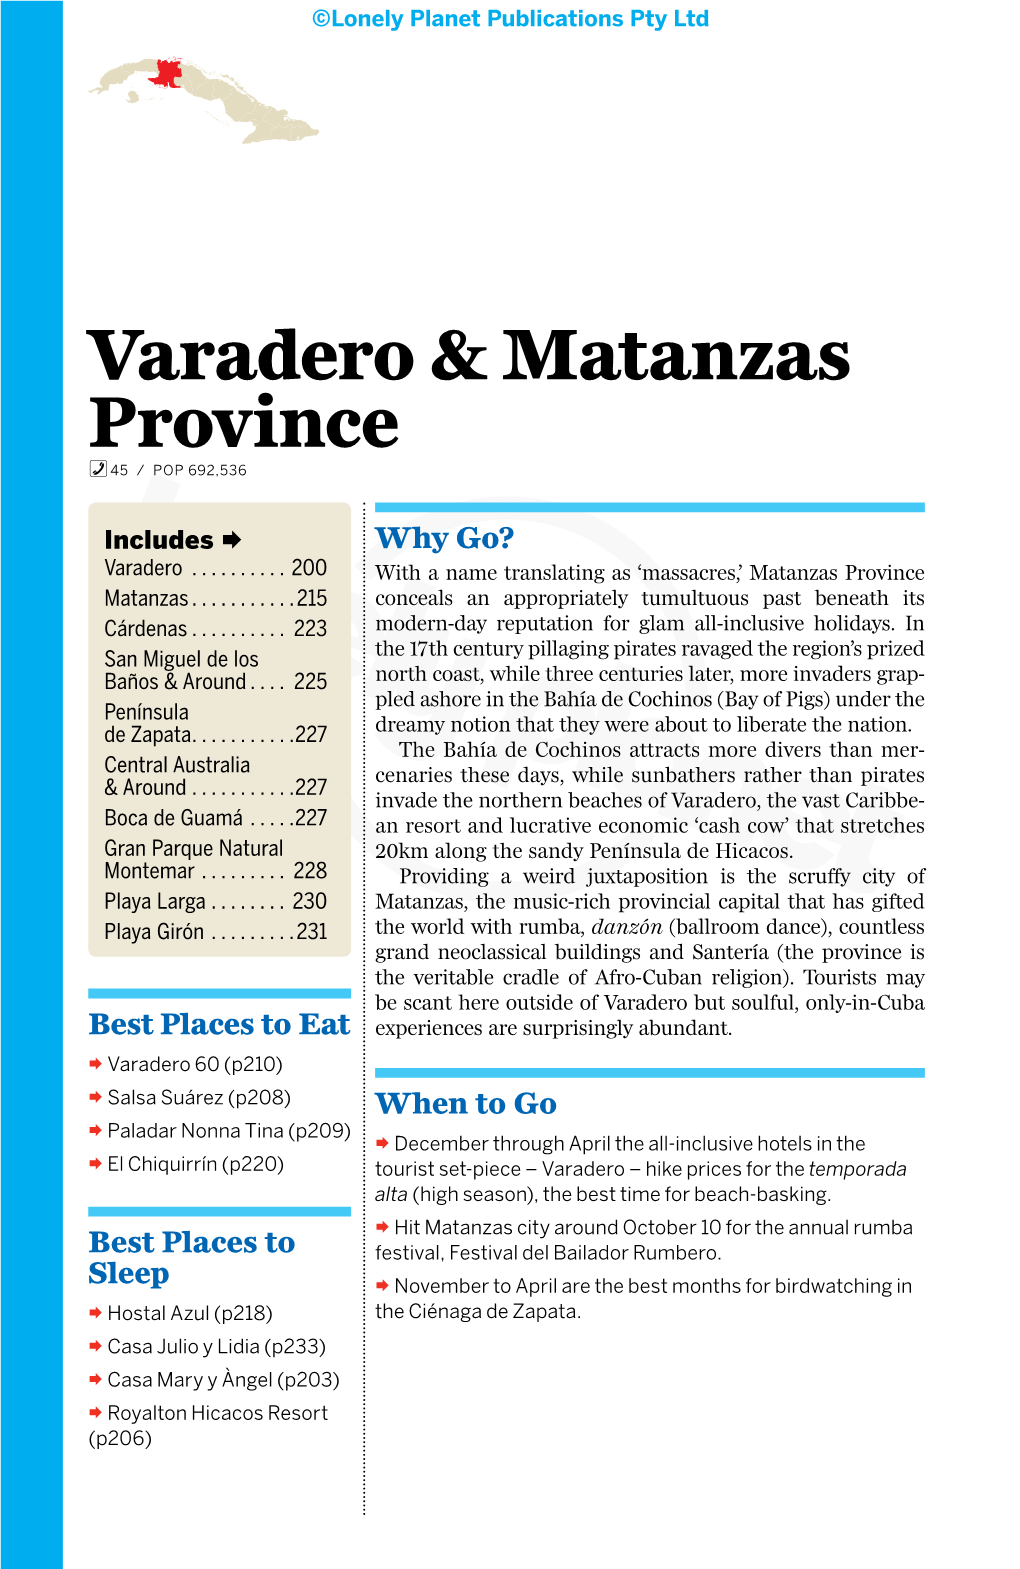 Varadero & Matanzas Province